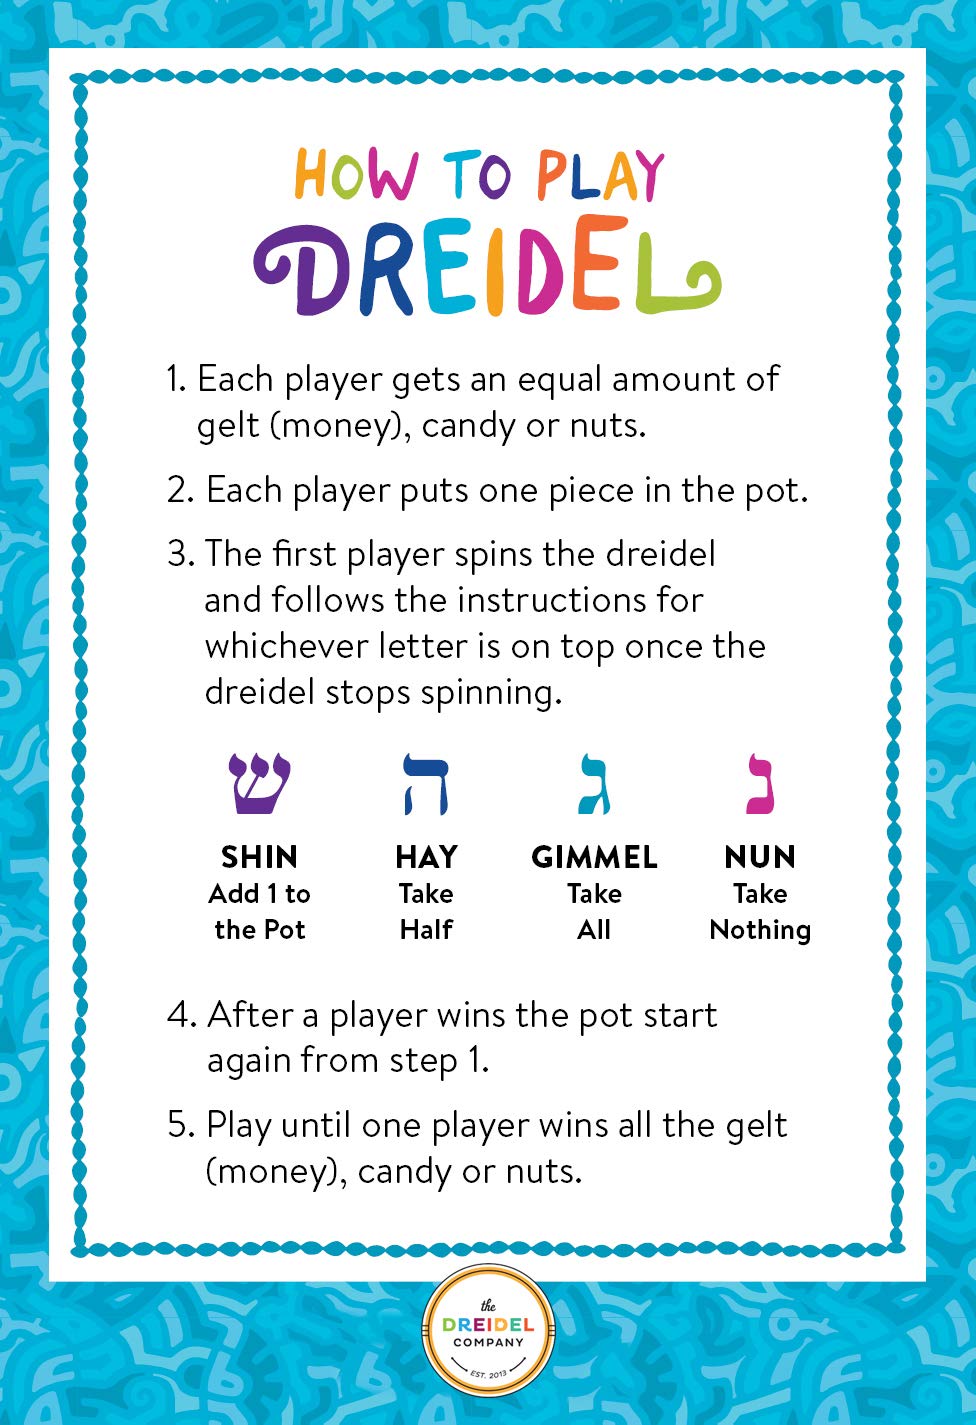 Hanukkah Dreidel Bulk Solid Blue & White Wooden Dreidels Hand Painted - Game Instructions Included! (4-Pack)